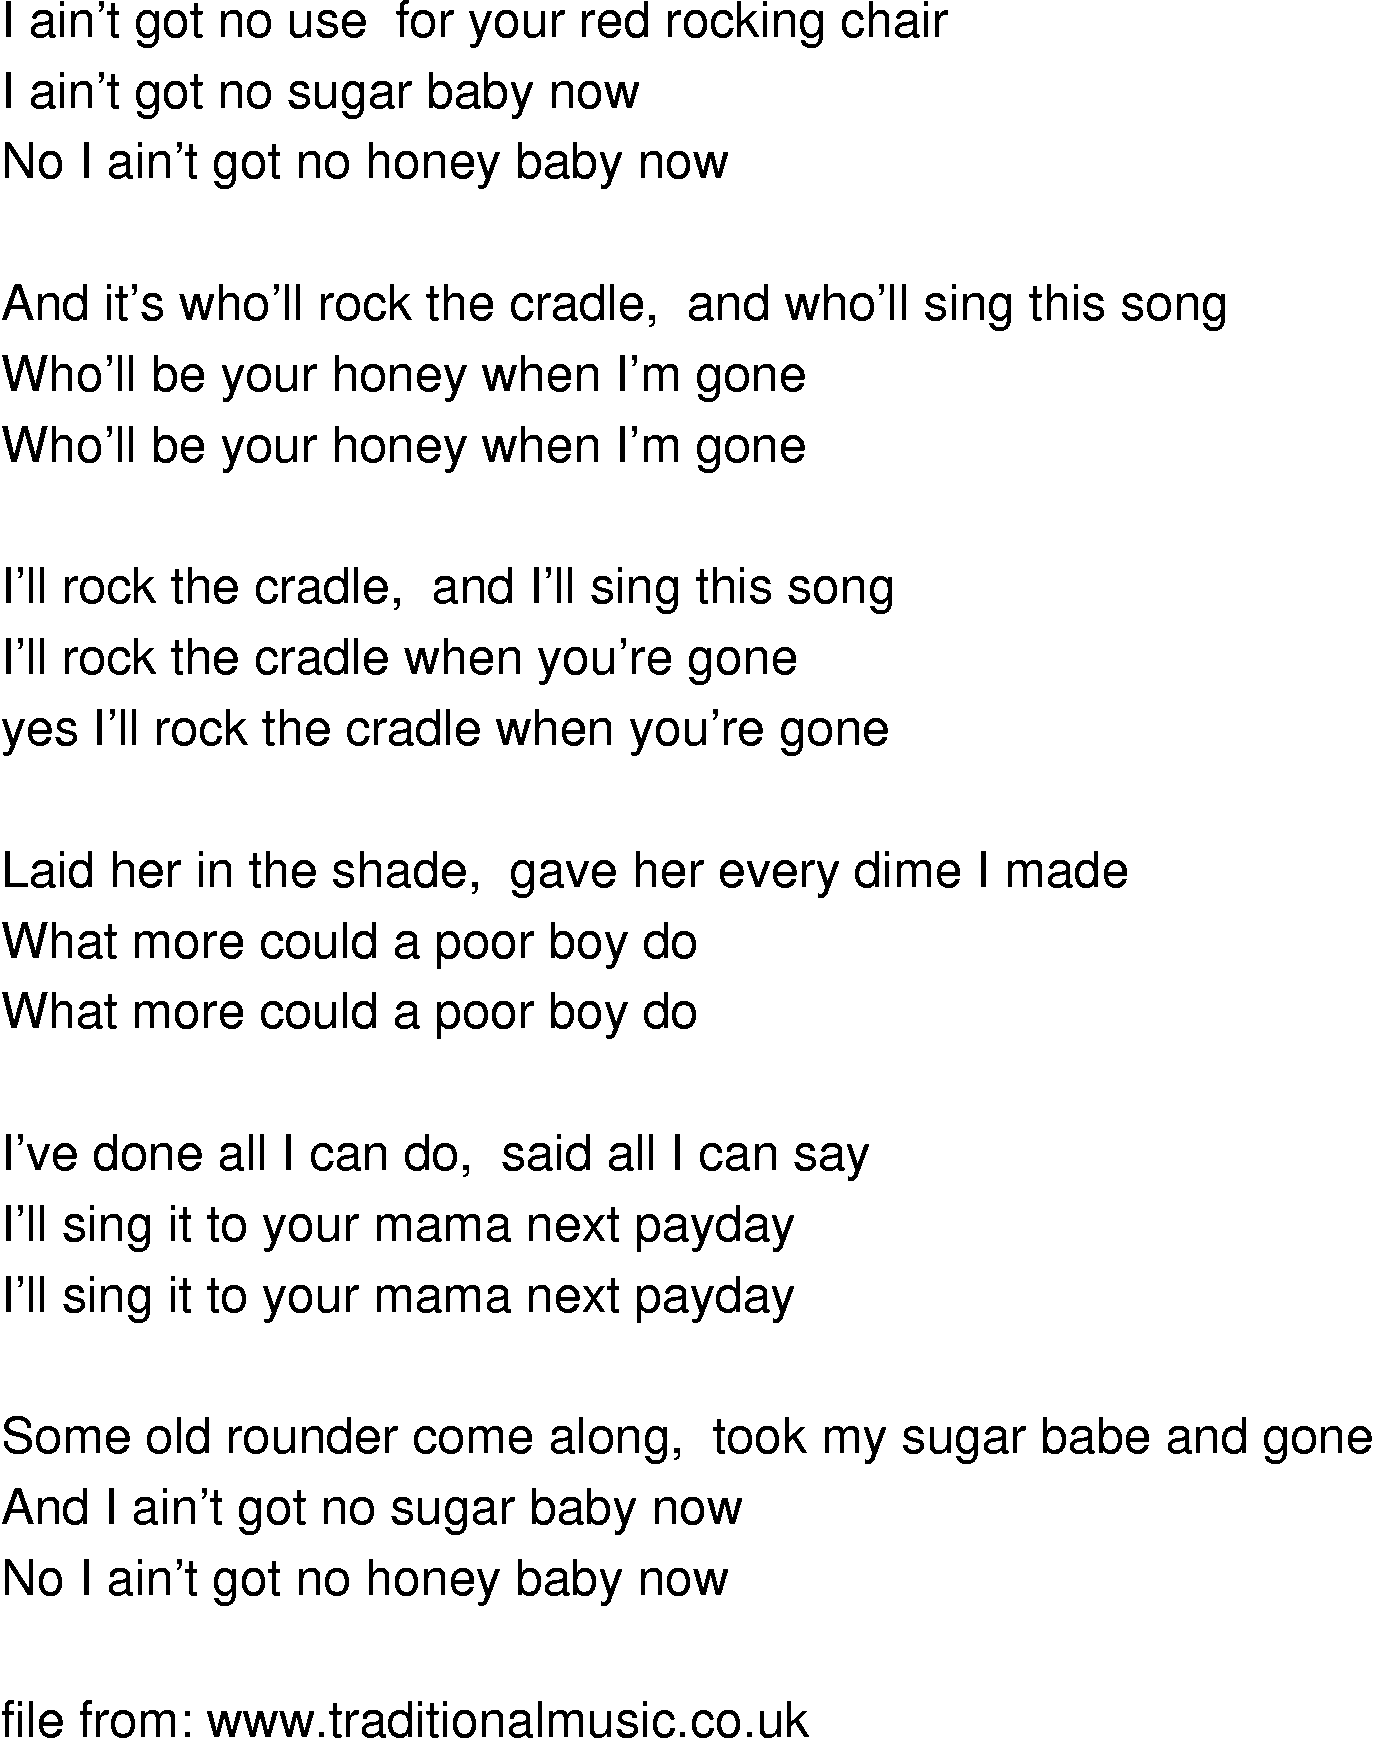 Old Time Song Lyrics Red Rocking Chair